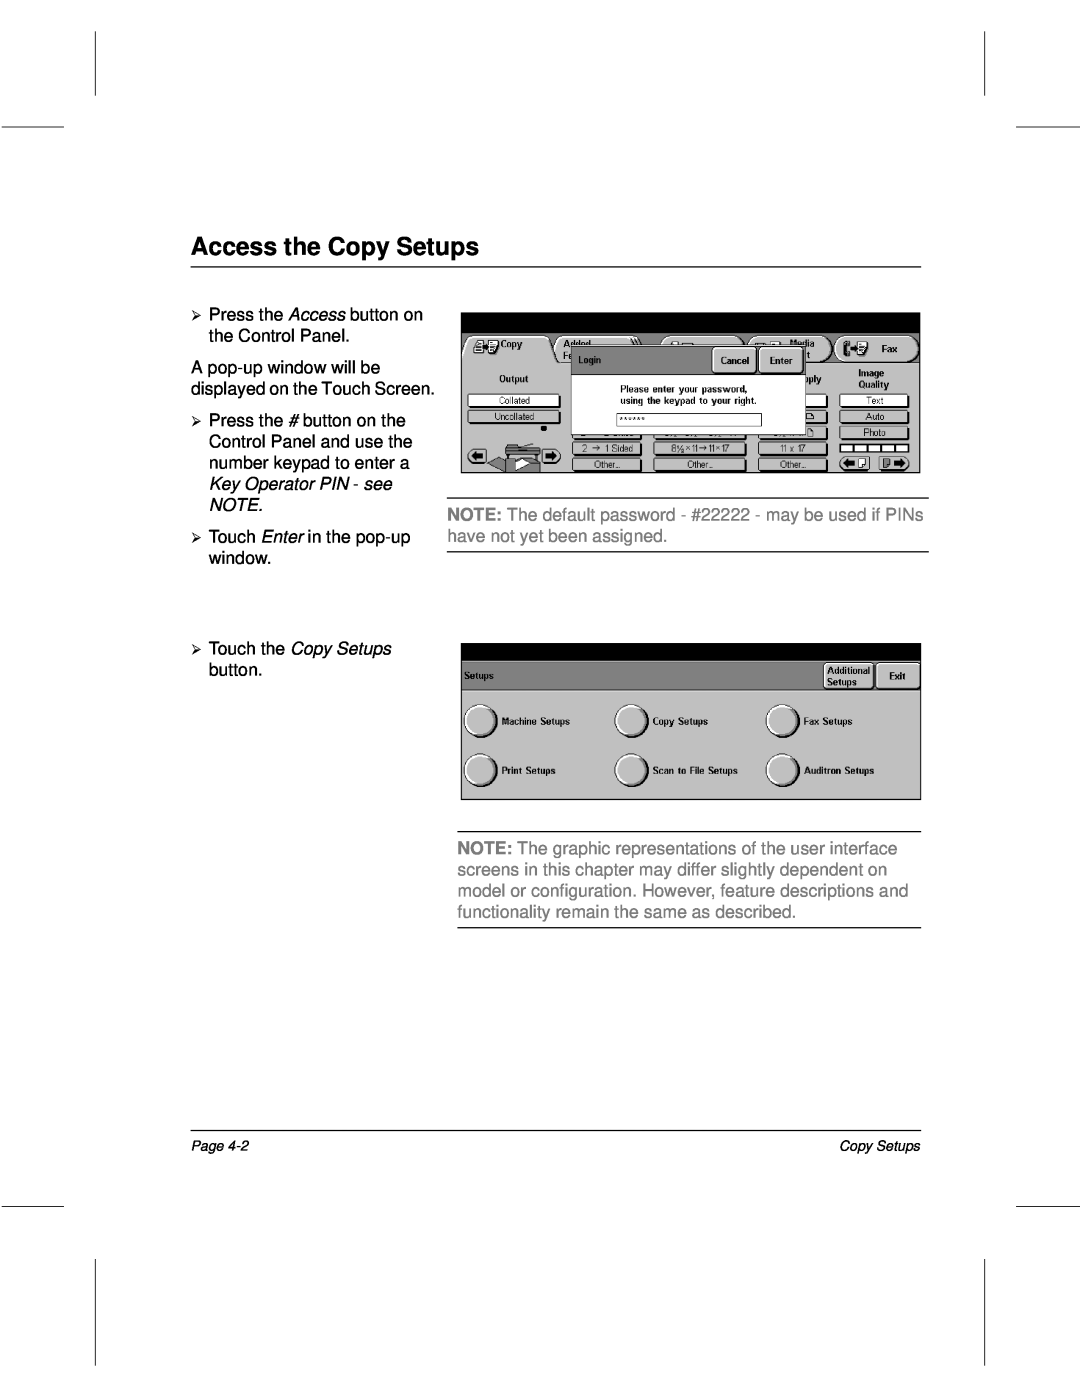 Xerox 340, 332, 220, 230 setup guide Access the Copy Setups, ¿ Note, Touch the Copy Setups button 